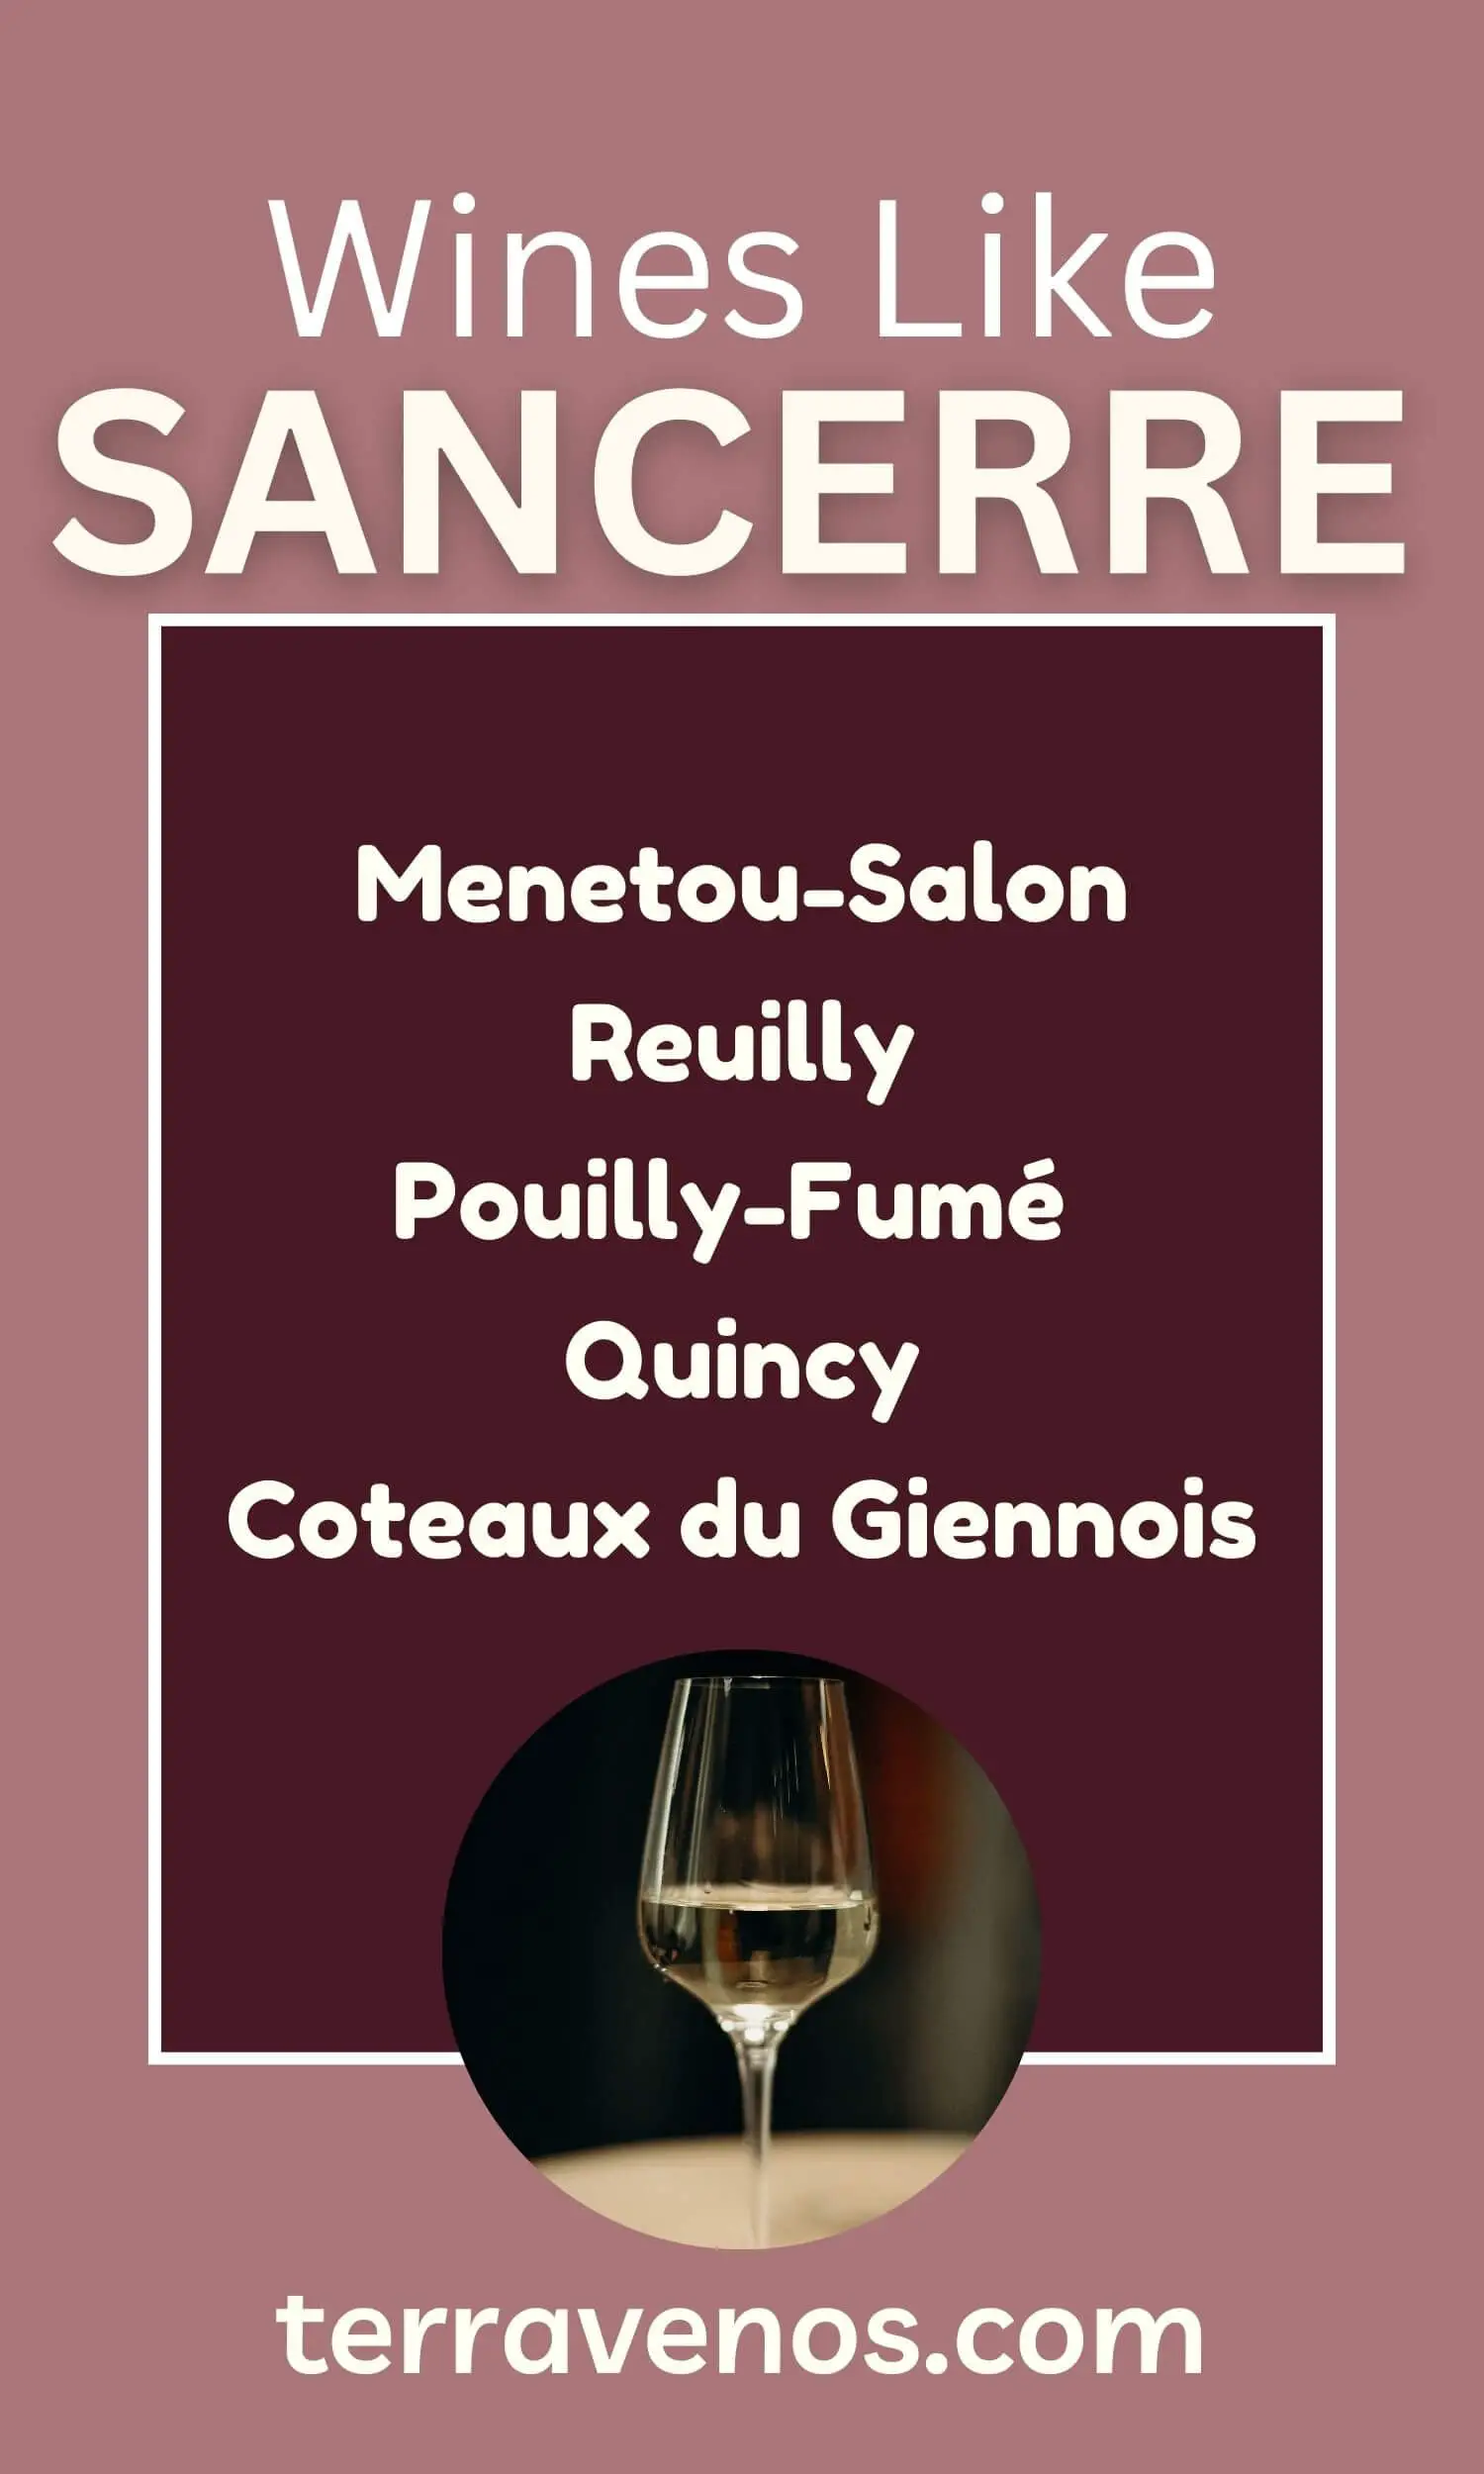 wines like sancerre infographic